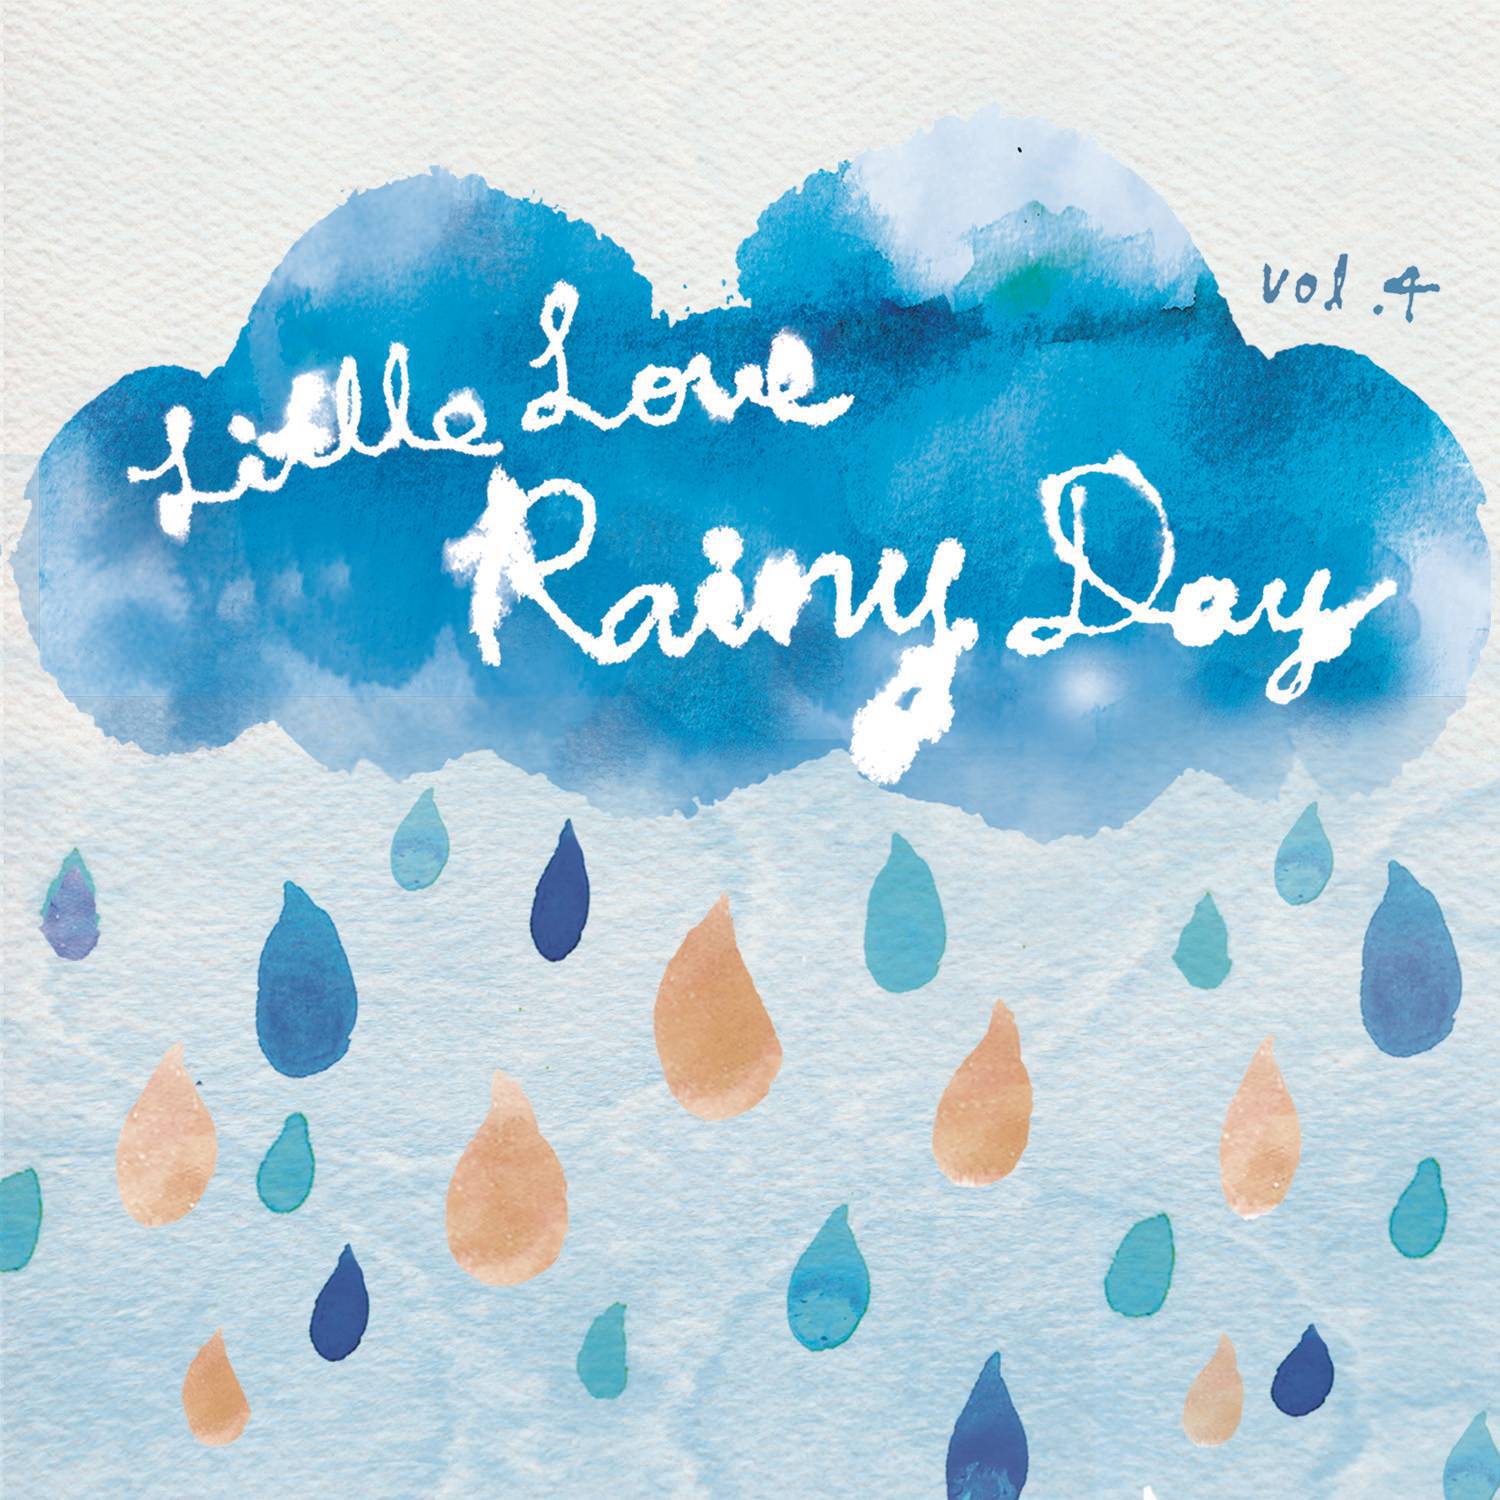 Little Love Vol. 4: Rainy Day